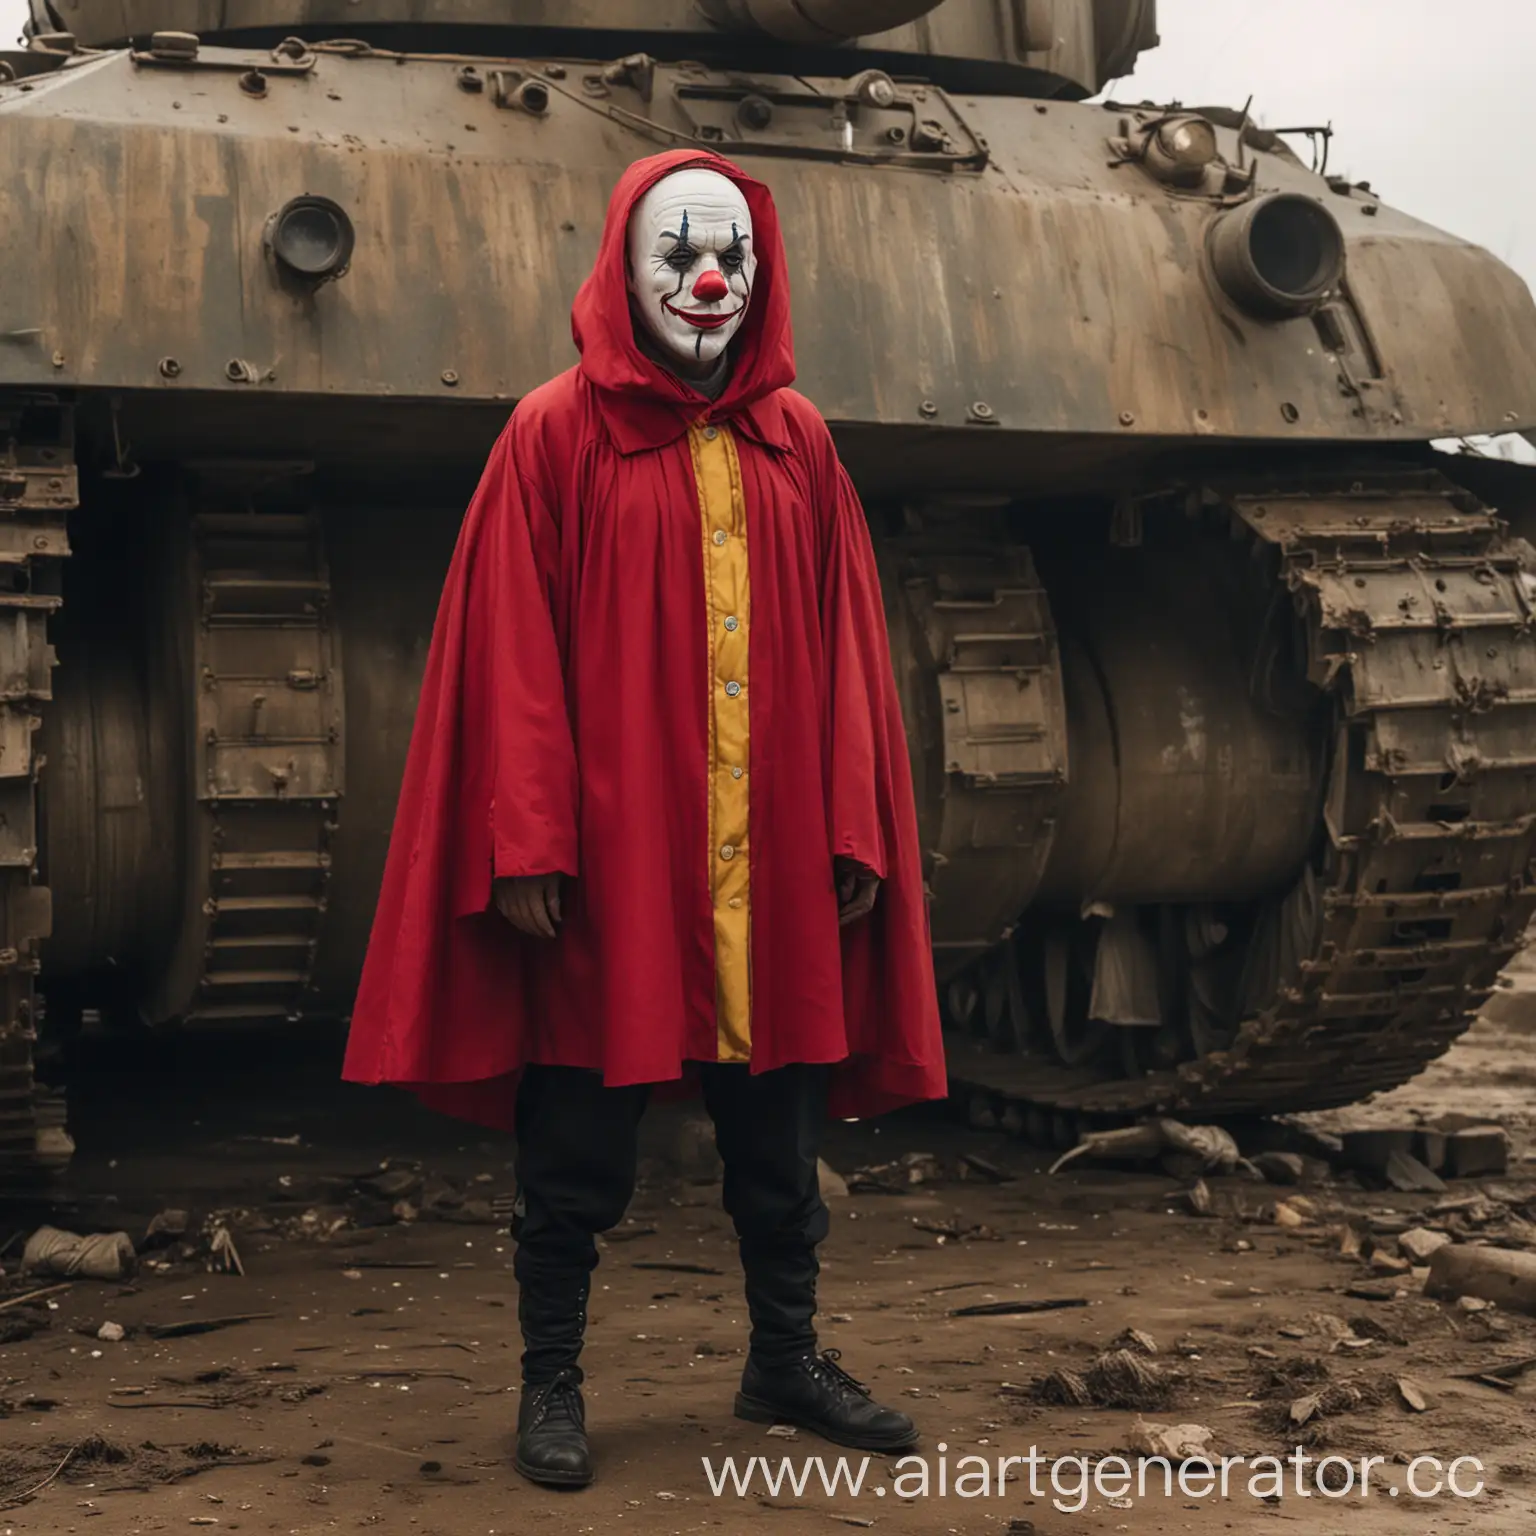 мужчина в красном плаще и маске клоуна стоит под танком